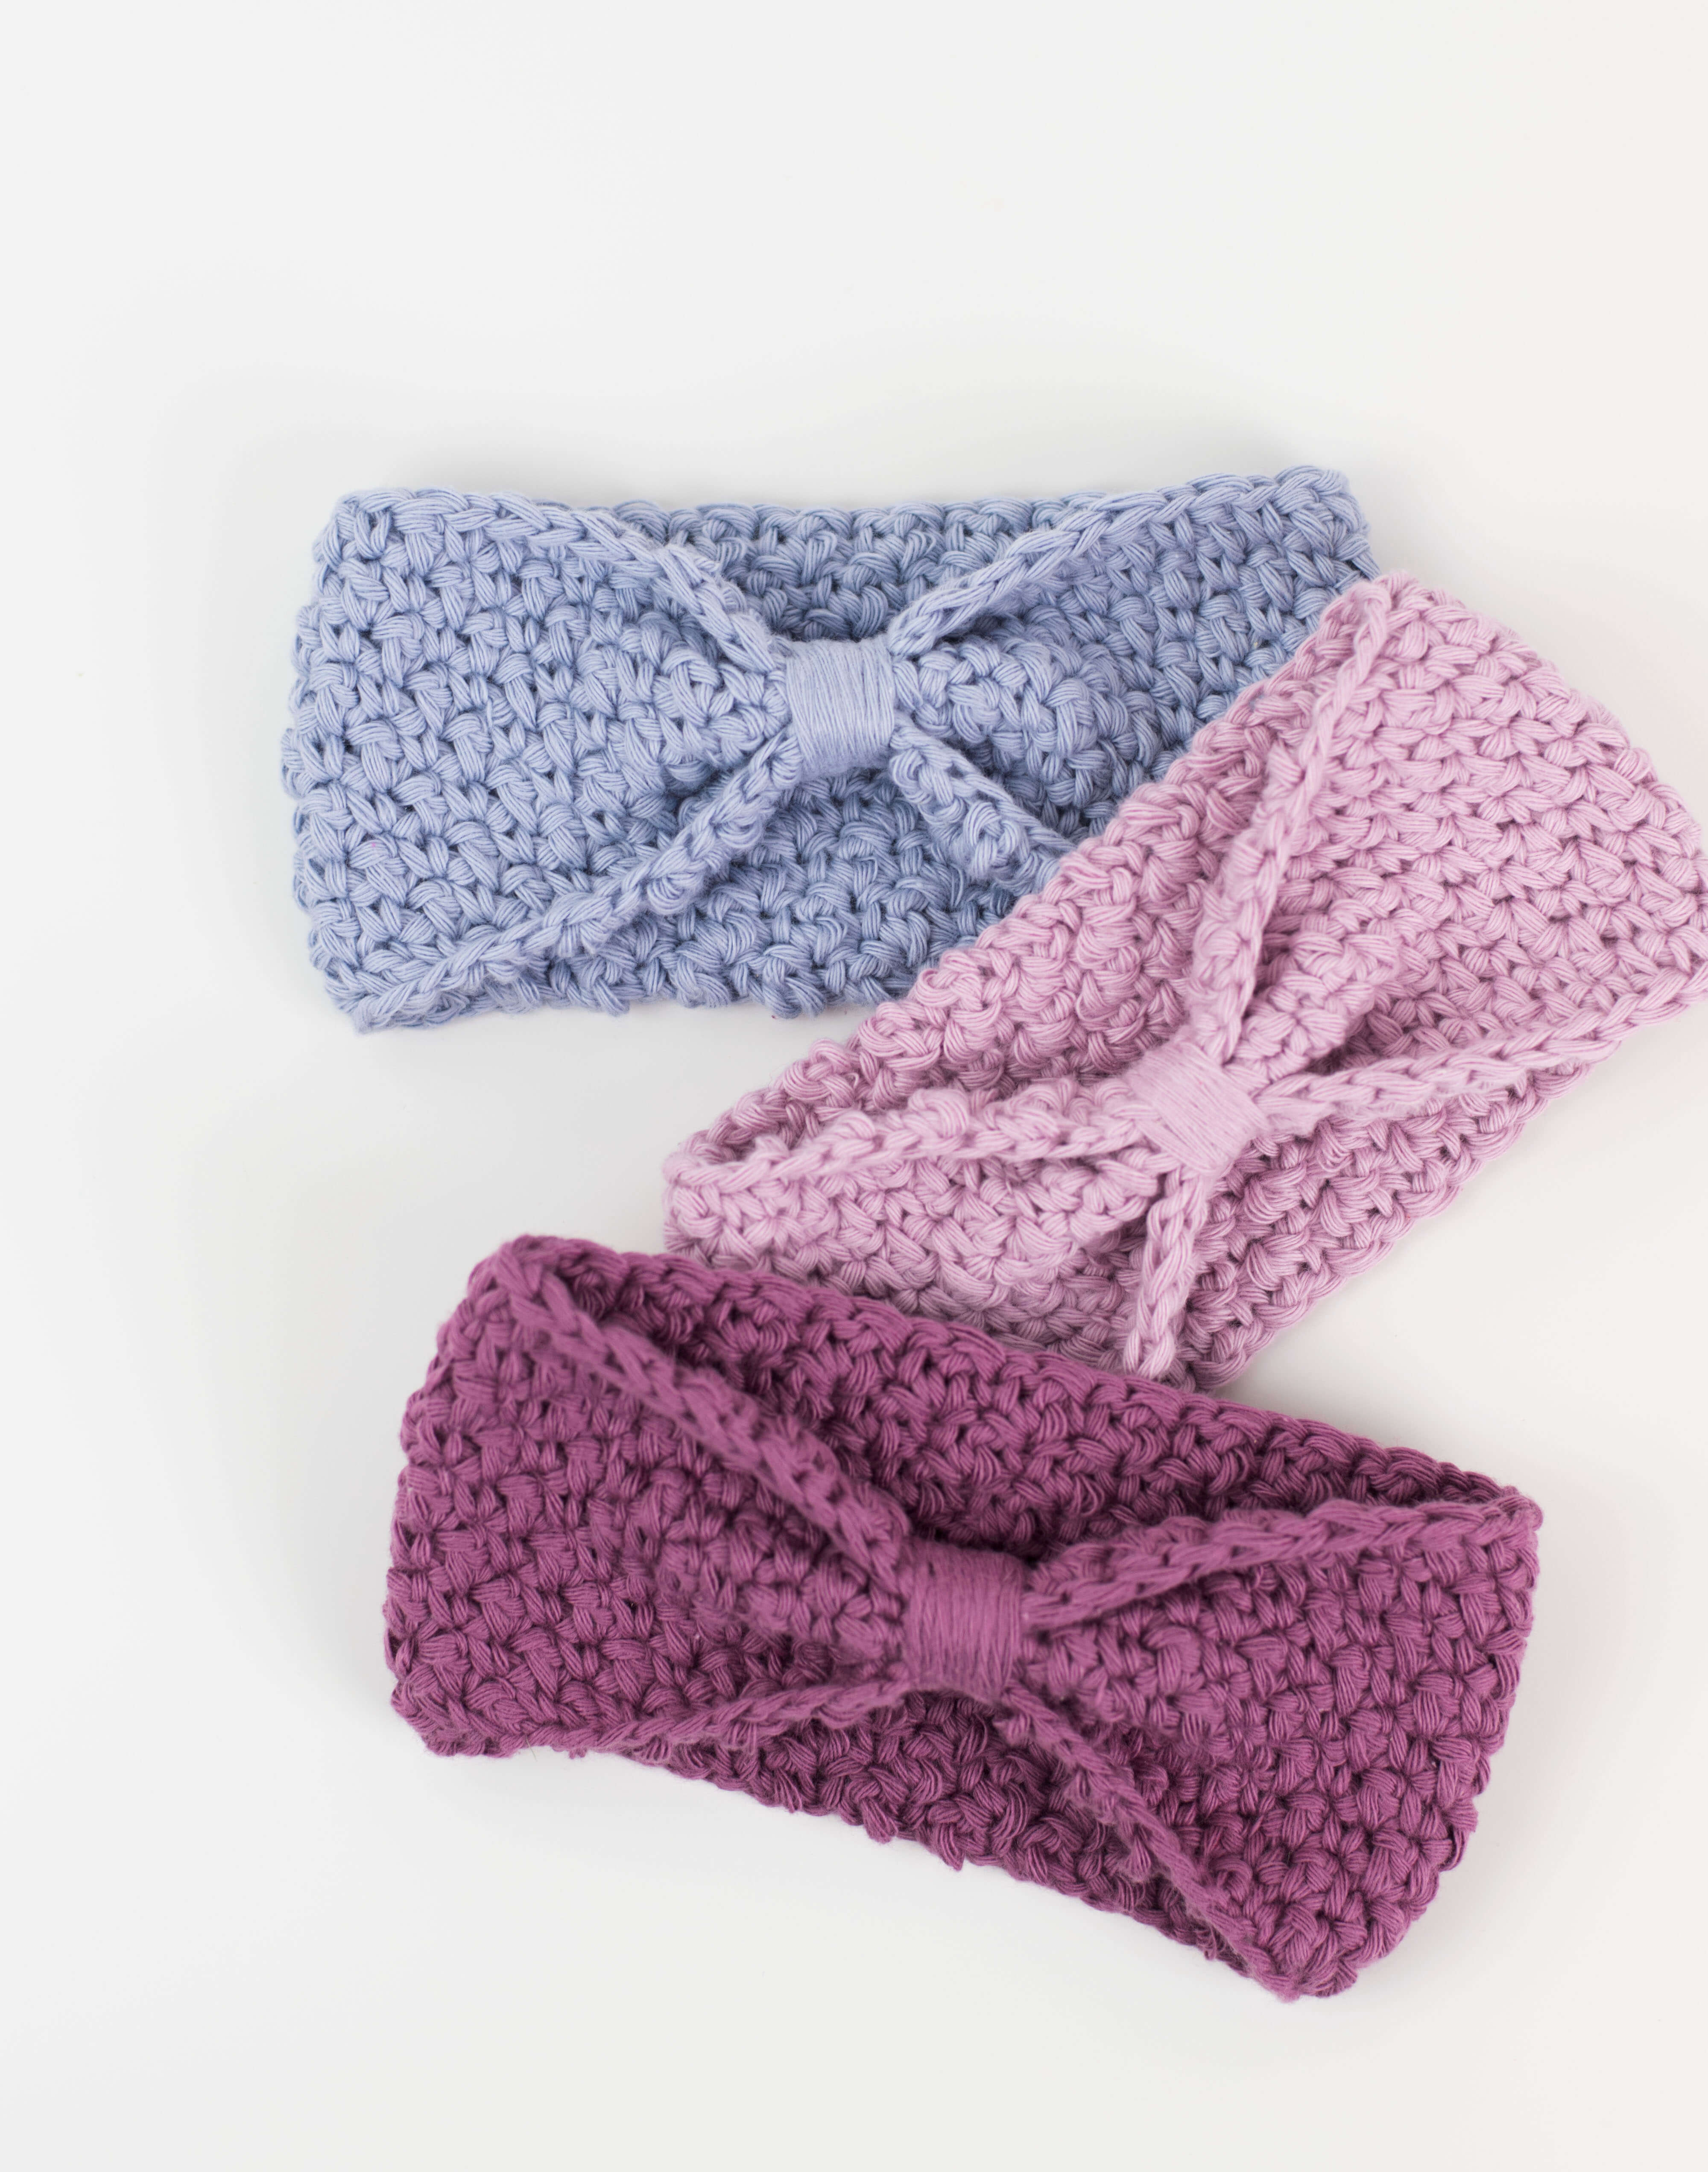 FREE PATTERN: Super Easy Crochet Headband | Croby Patterns